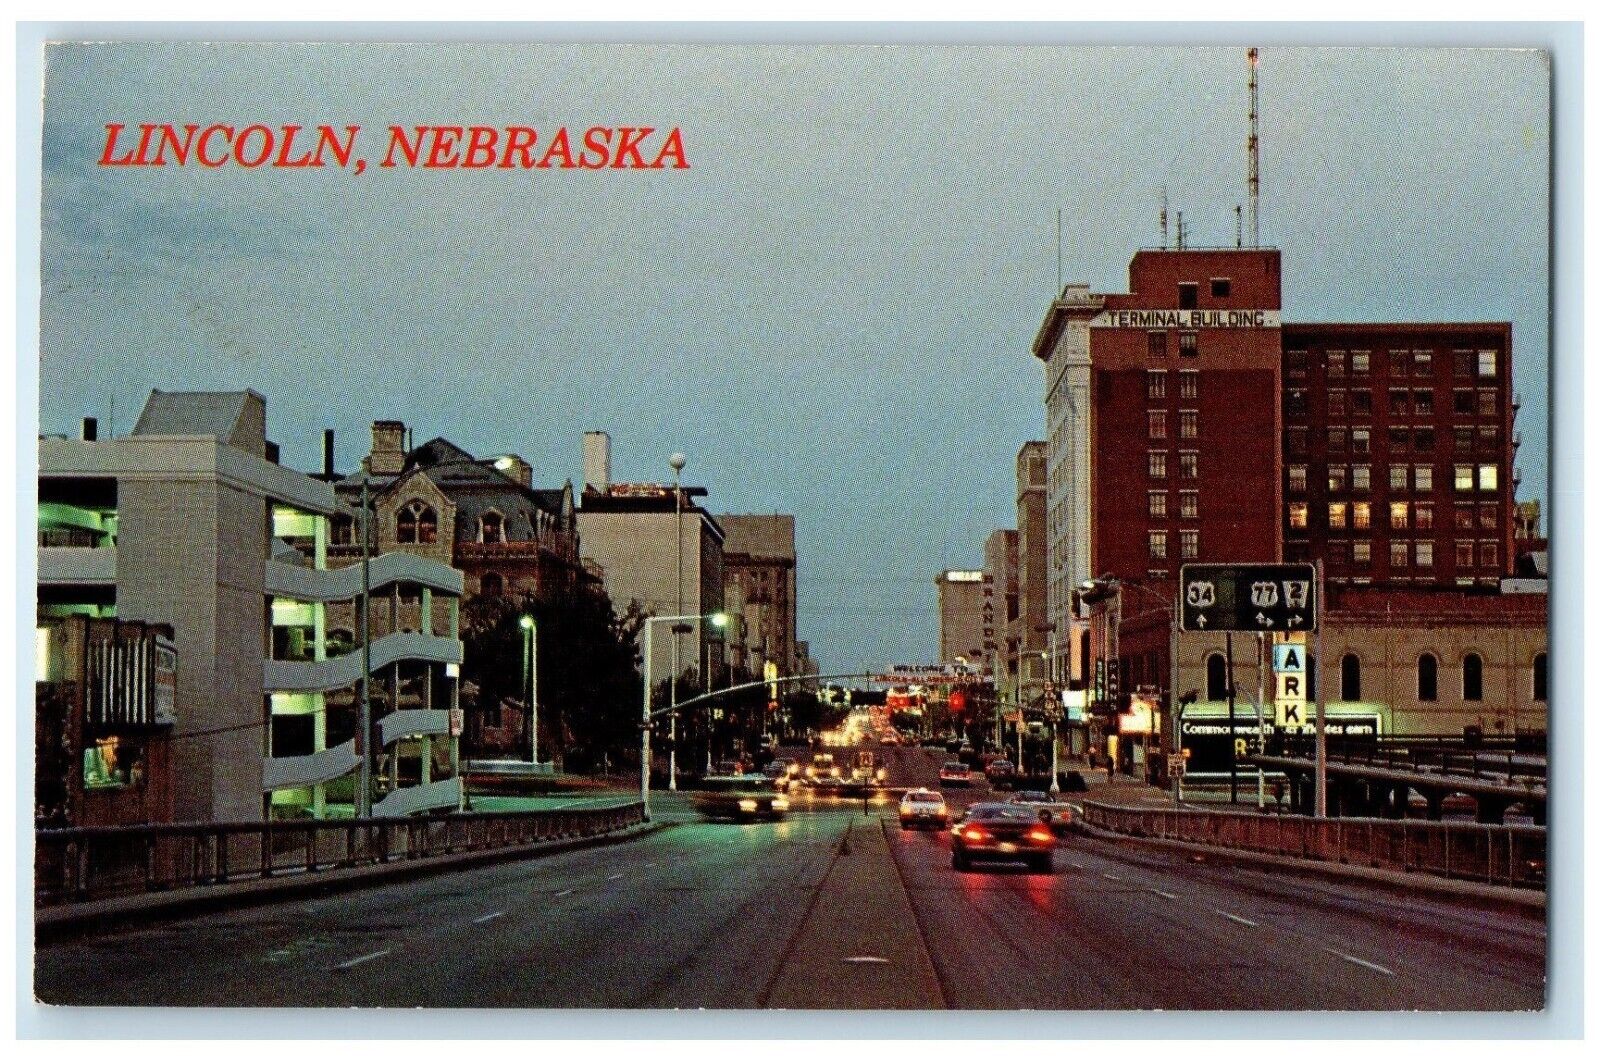 1992 O Street Business Community Classic Cars Building Lincoln Nebraska Postcard